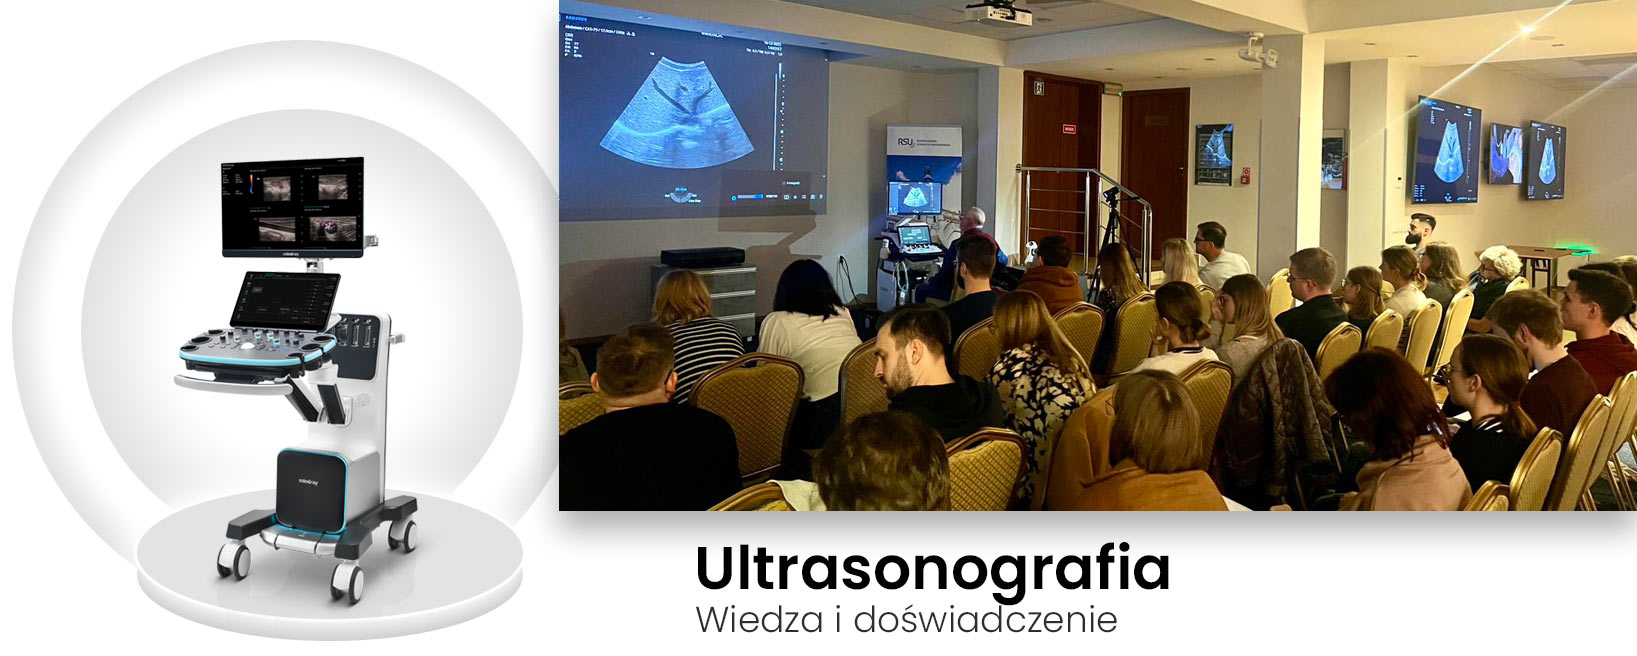 Top: Ultrasonografia